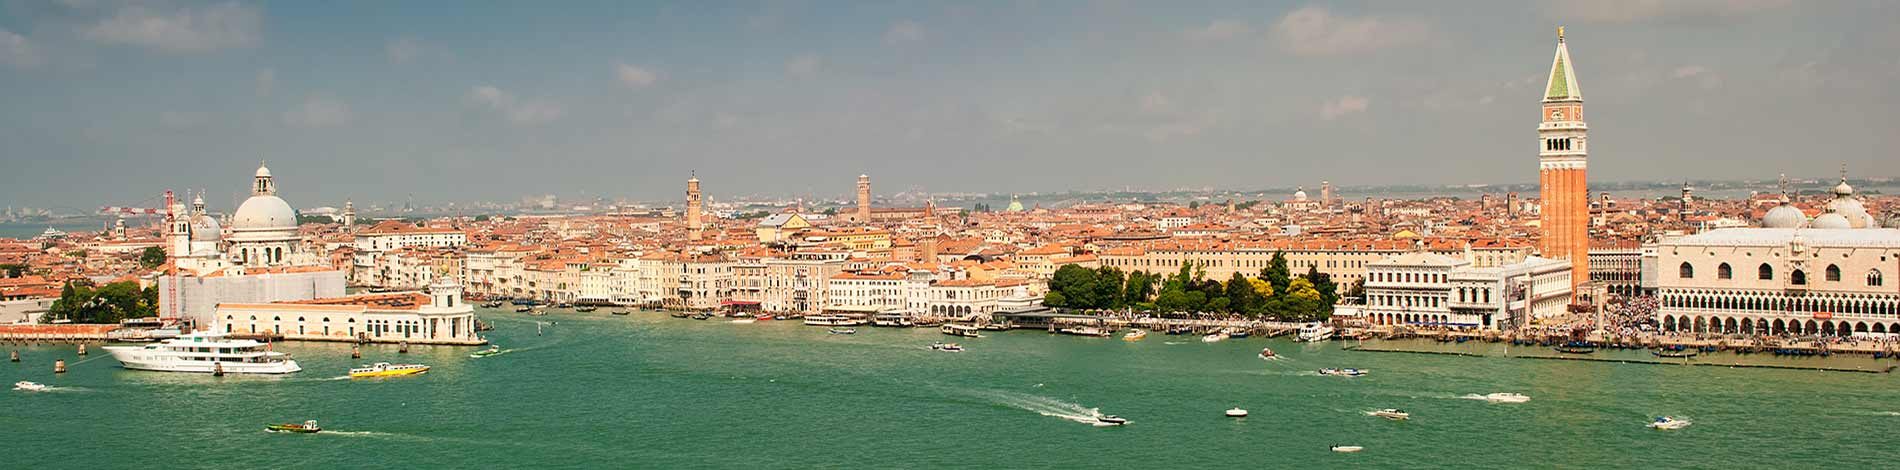 Venice-Italy-Panoramic